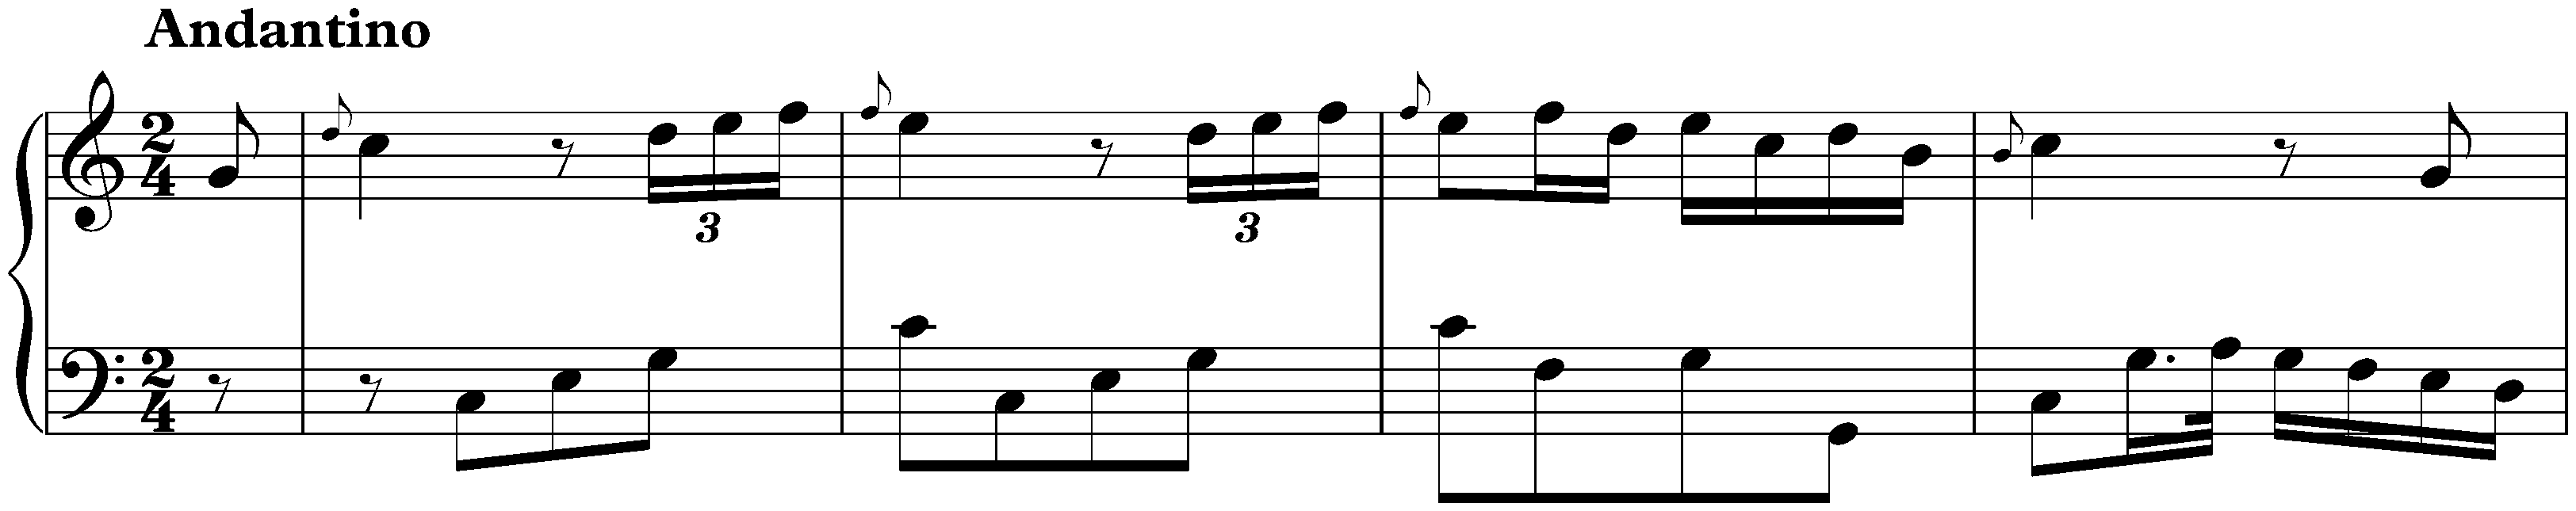 Sonatas found in Montserrat; 1. C major